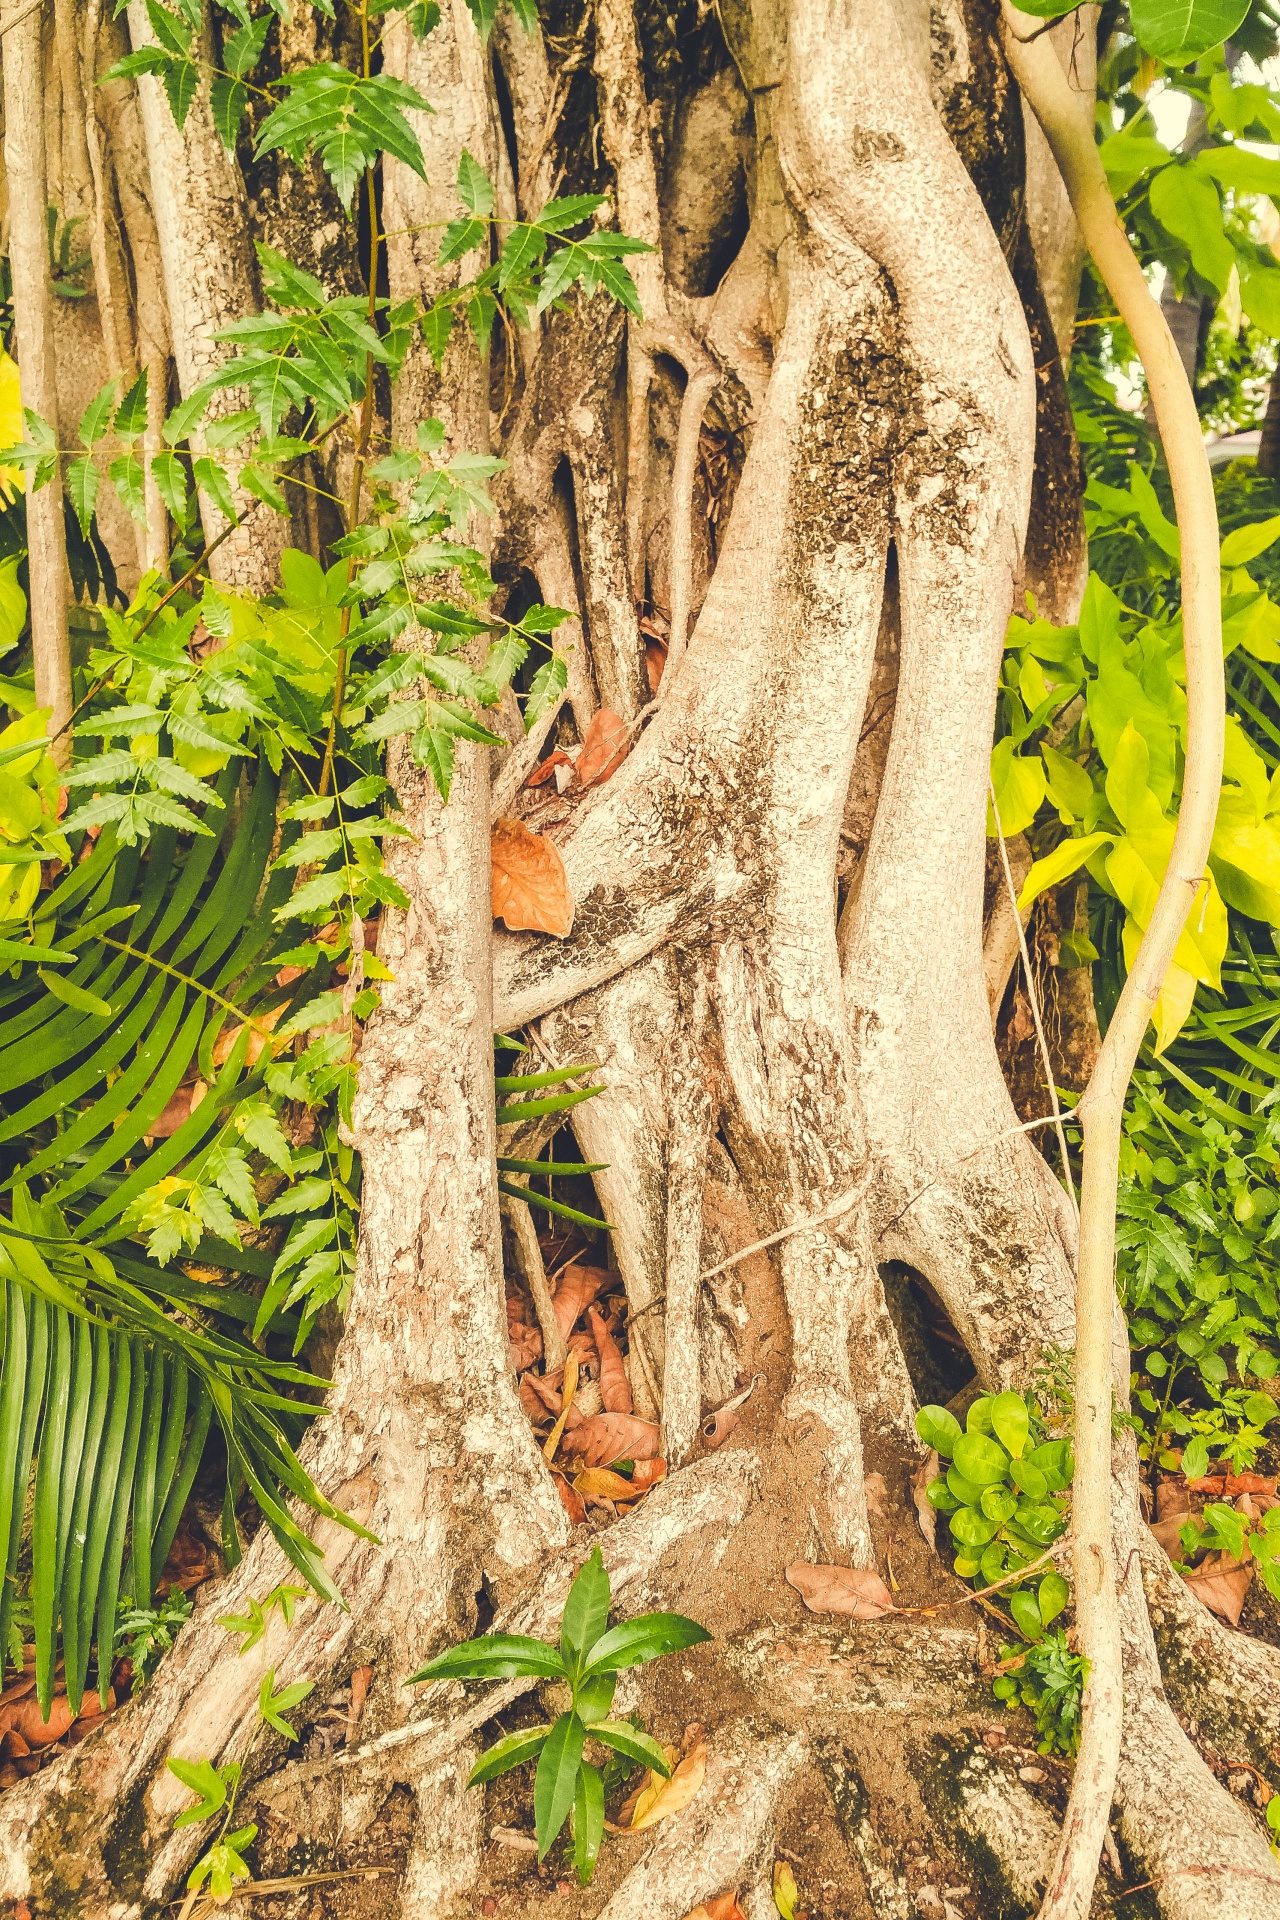 Raízes de árvores tropicais